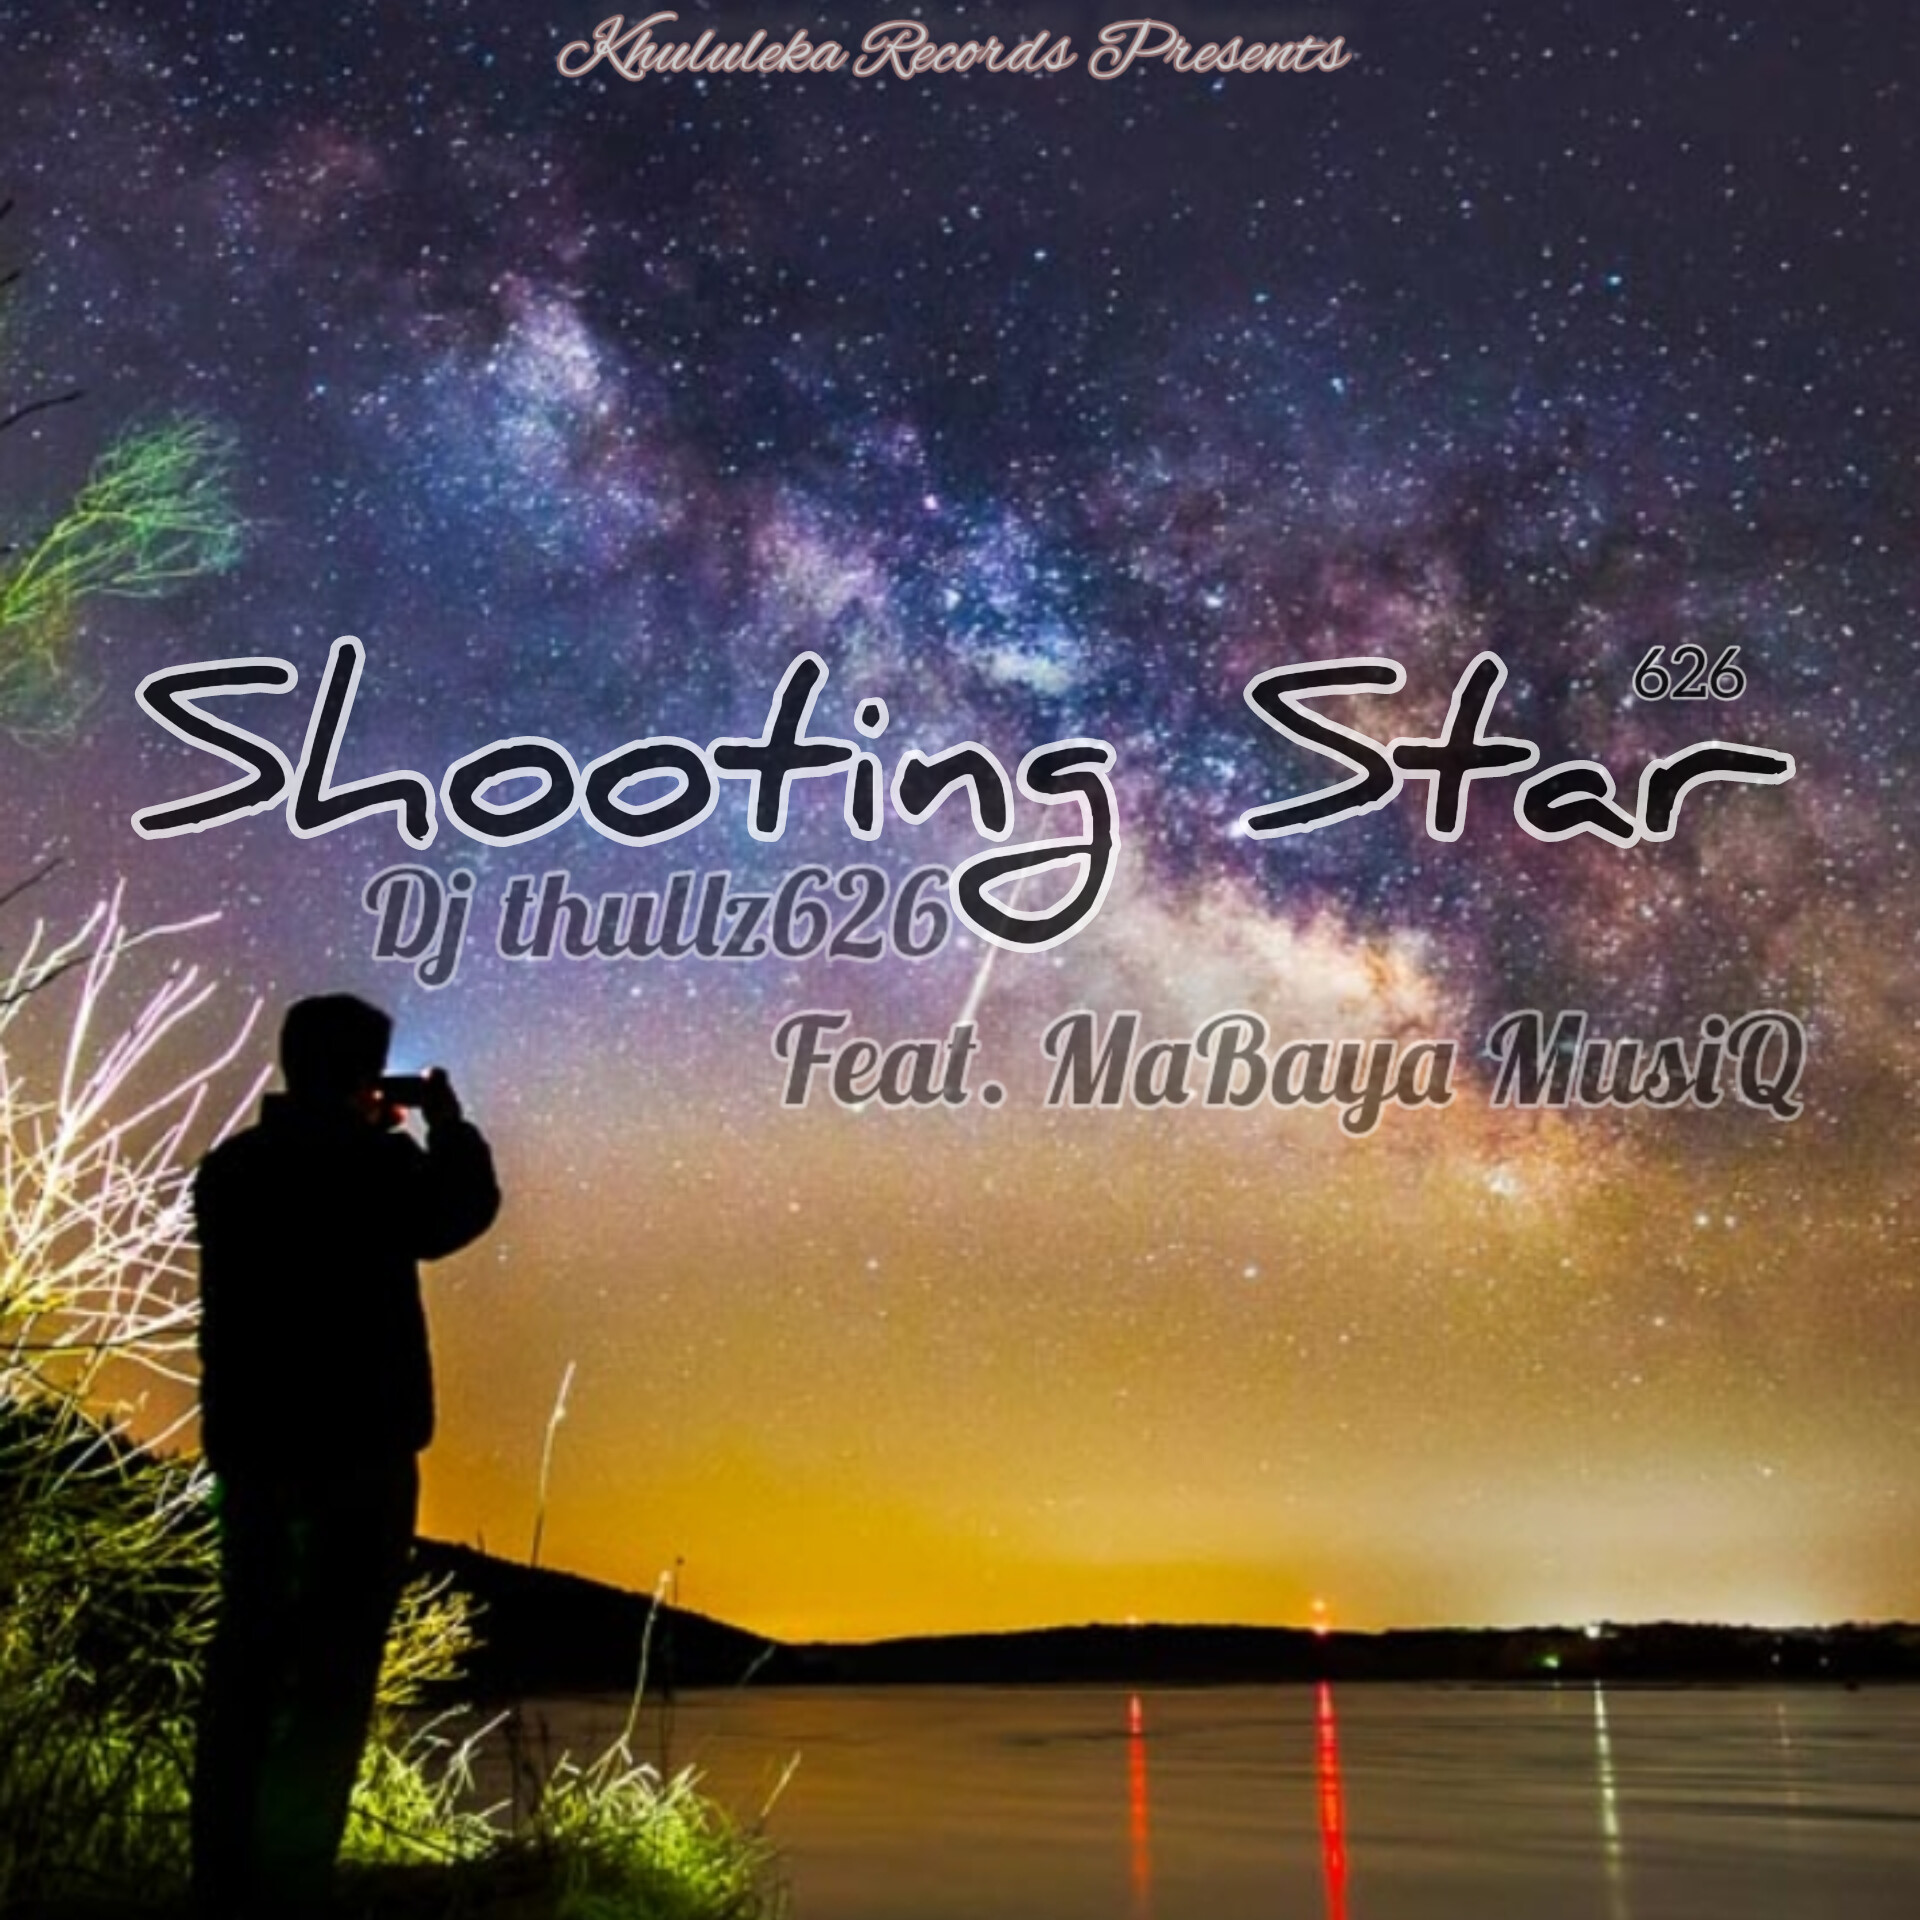 Shooting Star - Dj thullz626 feat. MaBaya MusiQ